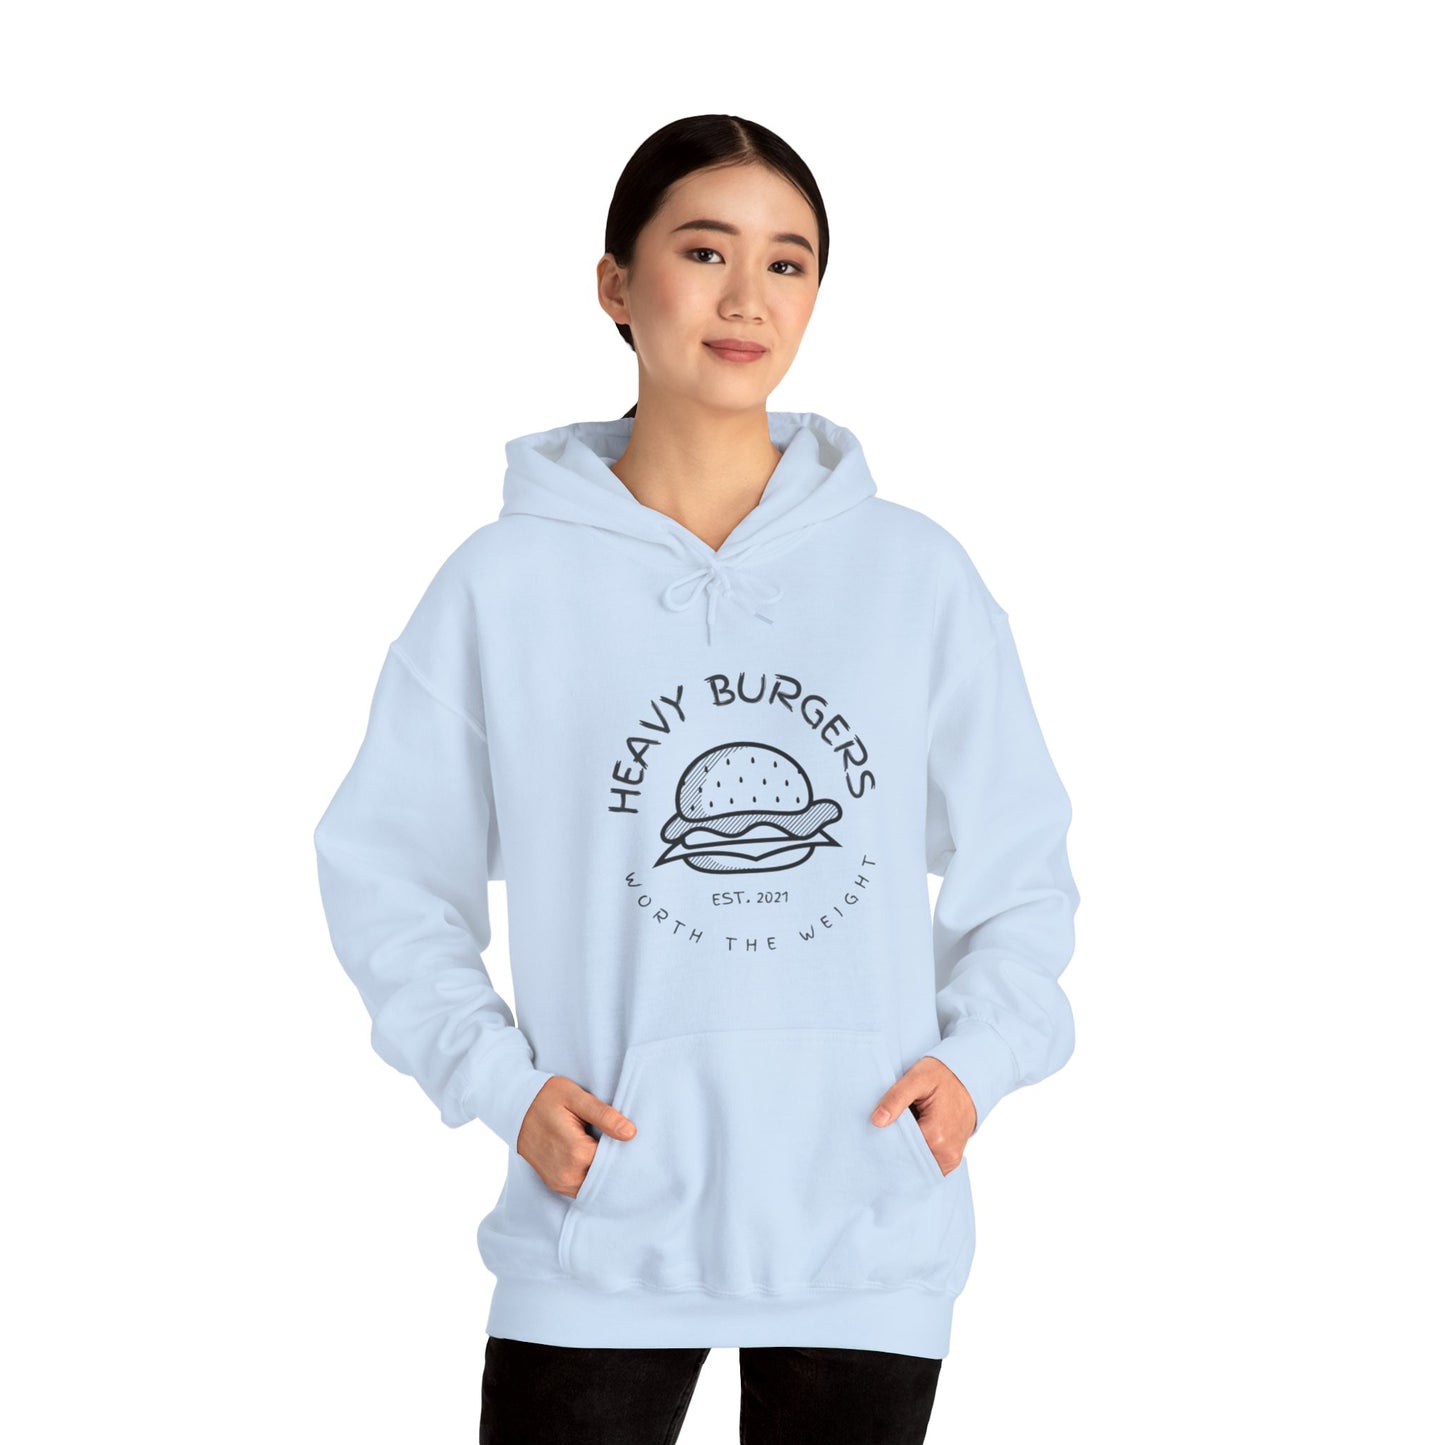 Heavy Burgers Hooded Sweatshirt